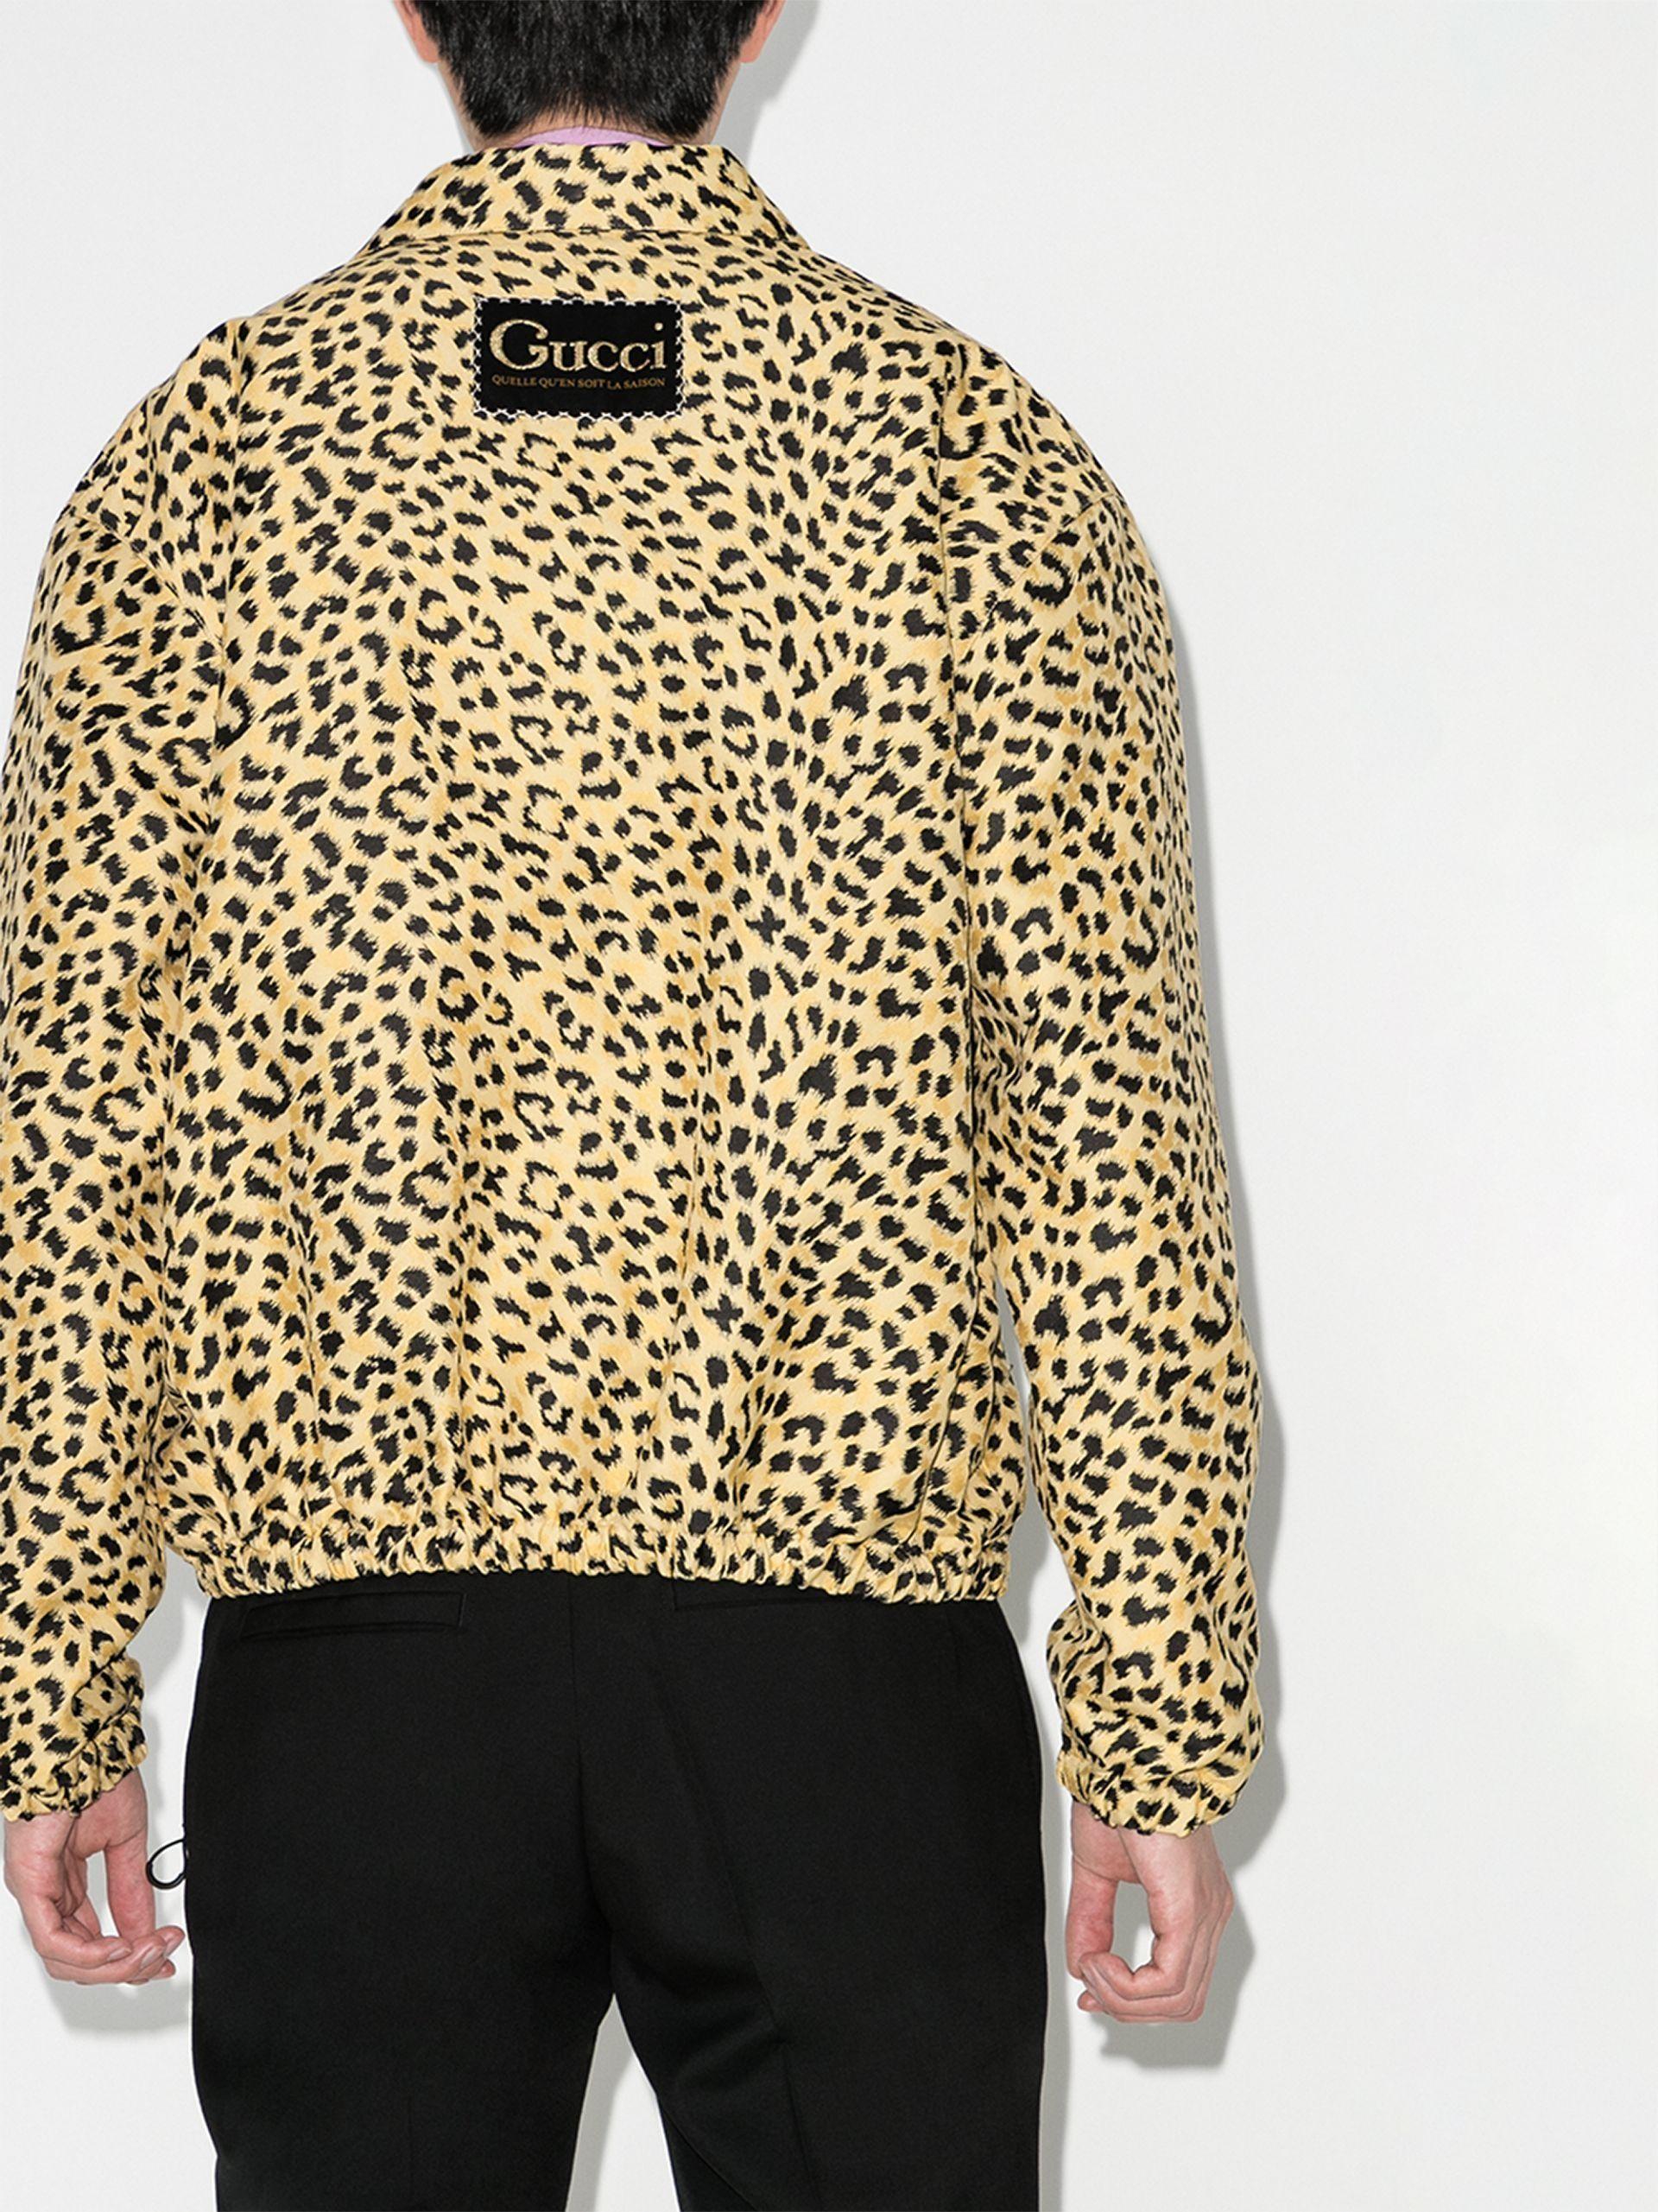 Gucci Cotton Leopard Print Bomber Jacket for Men - Lyst